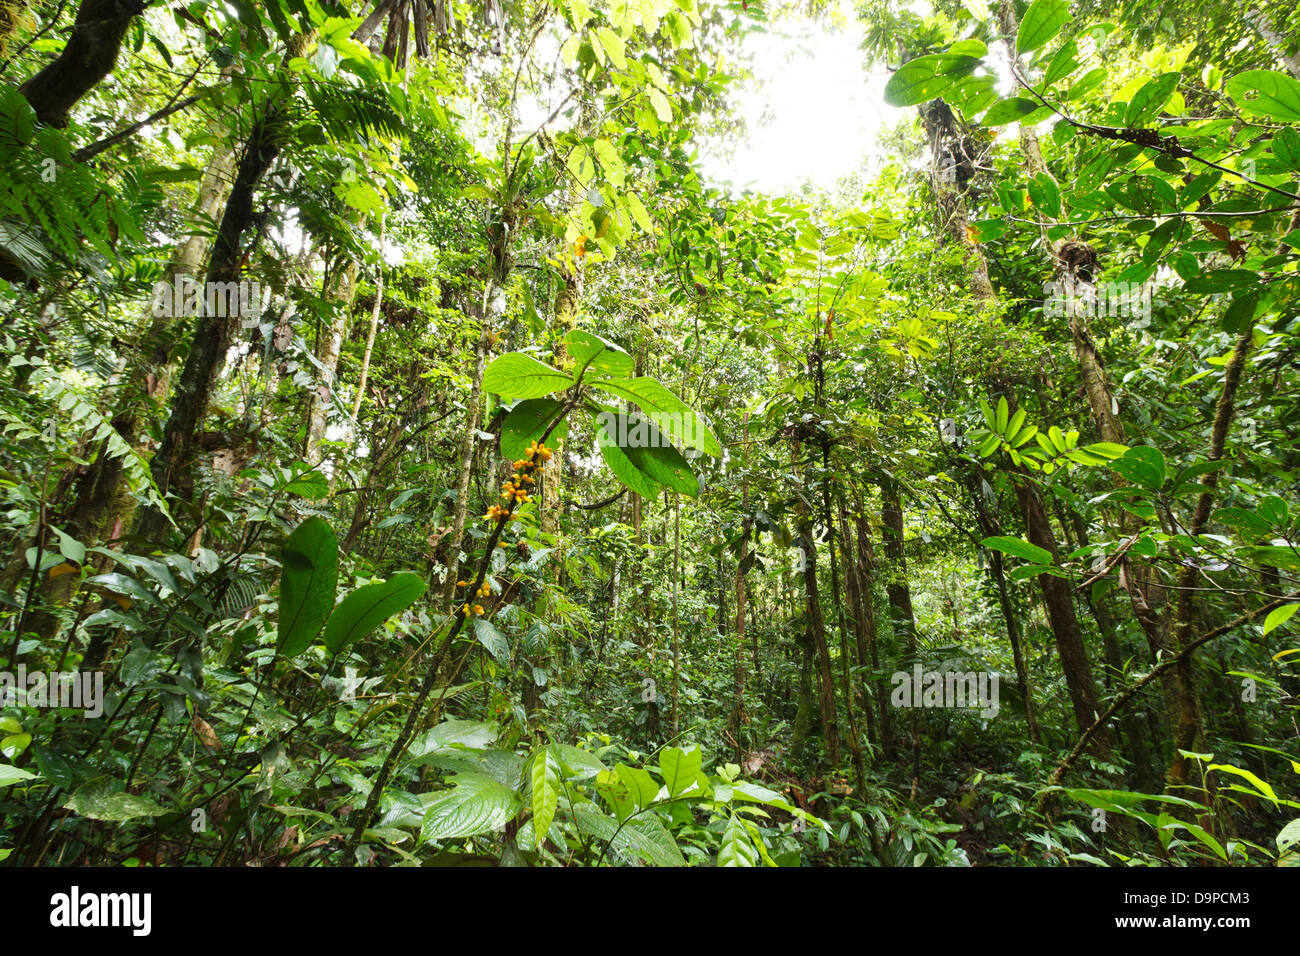 Flowering plant in the rainforest understory, Ecuador Stock Photo